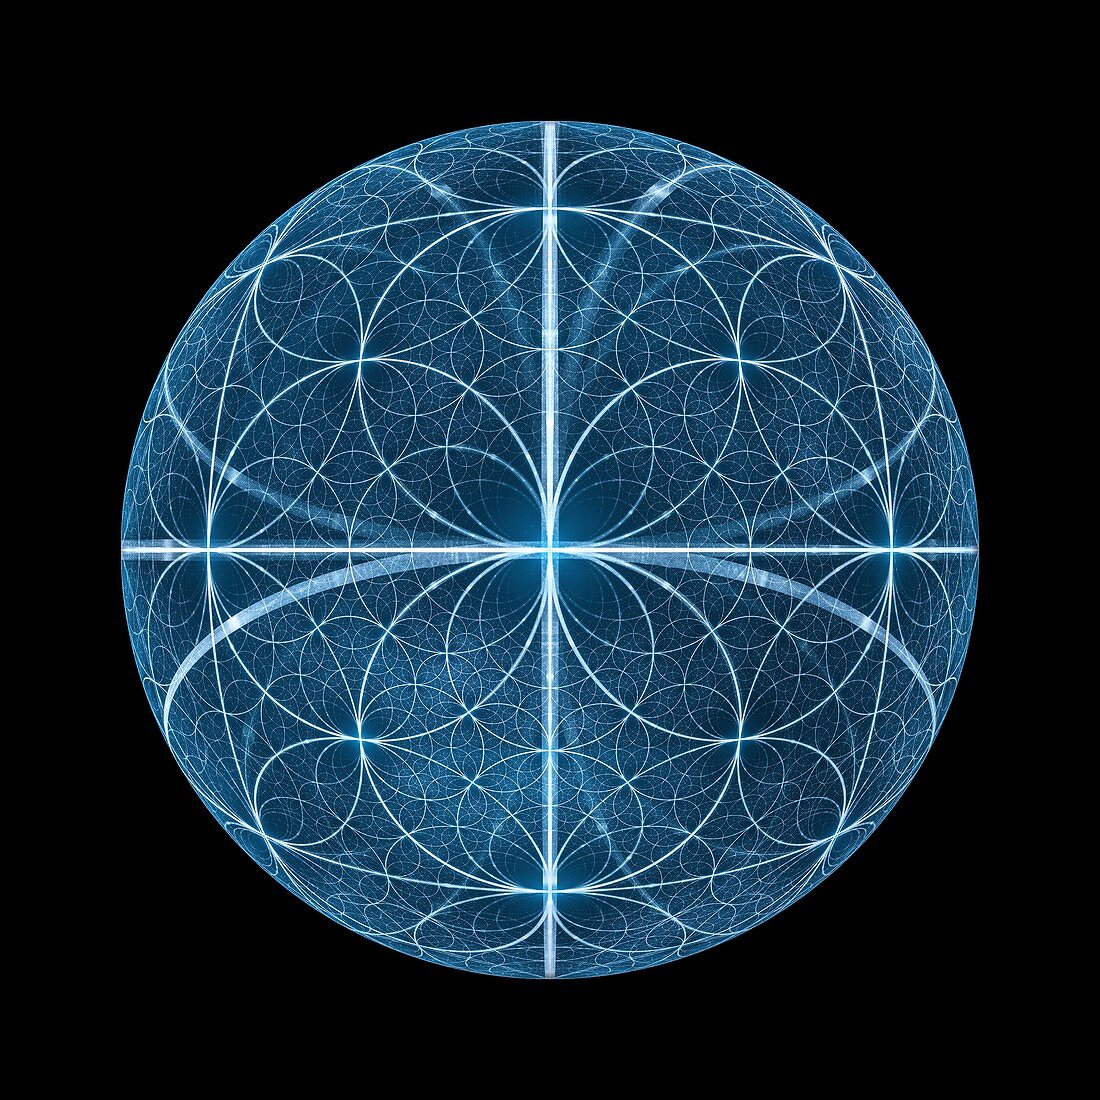 Fibonacci abstract fractal illustration